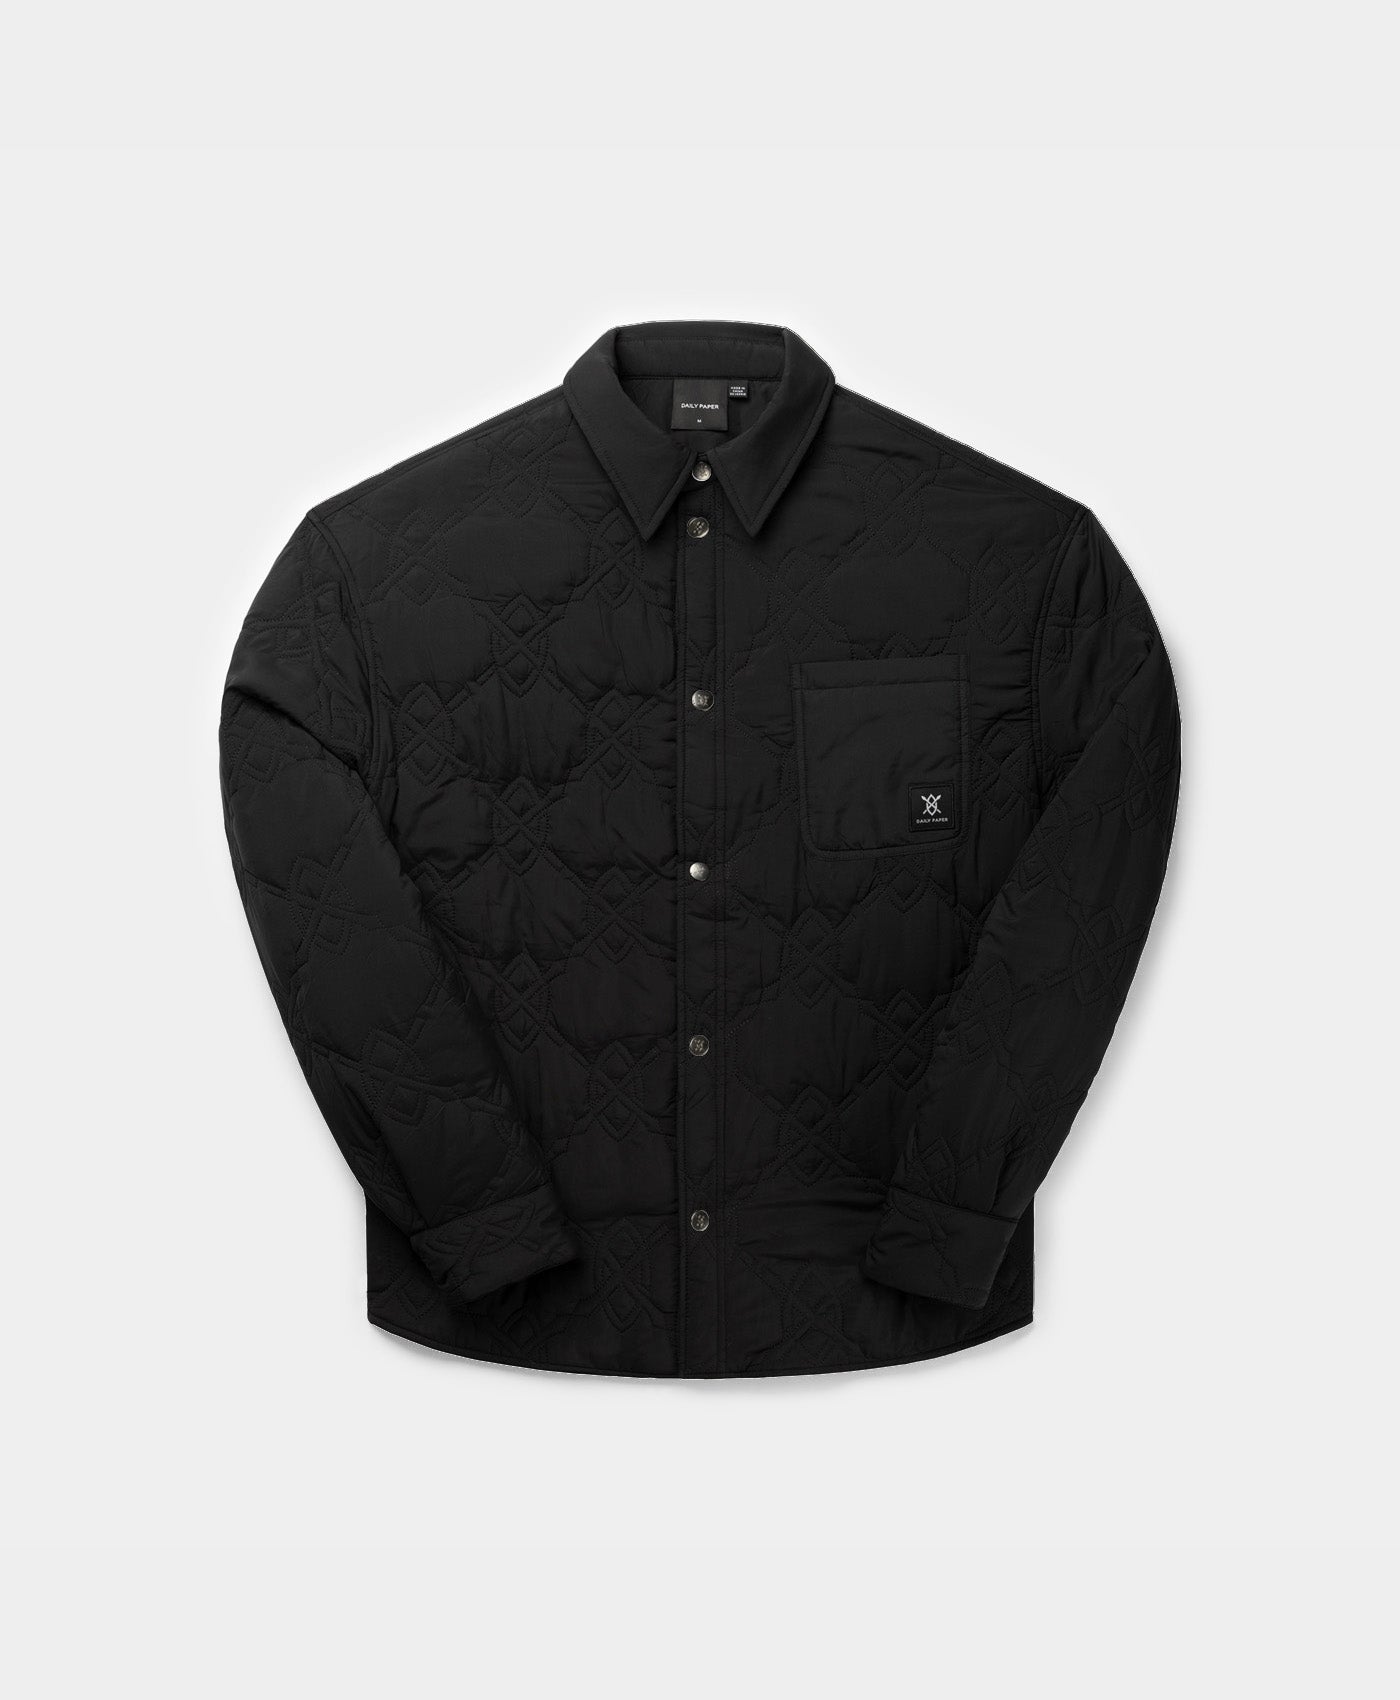 DP - Black Rajub LS Shirt - Packshot - Front 